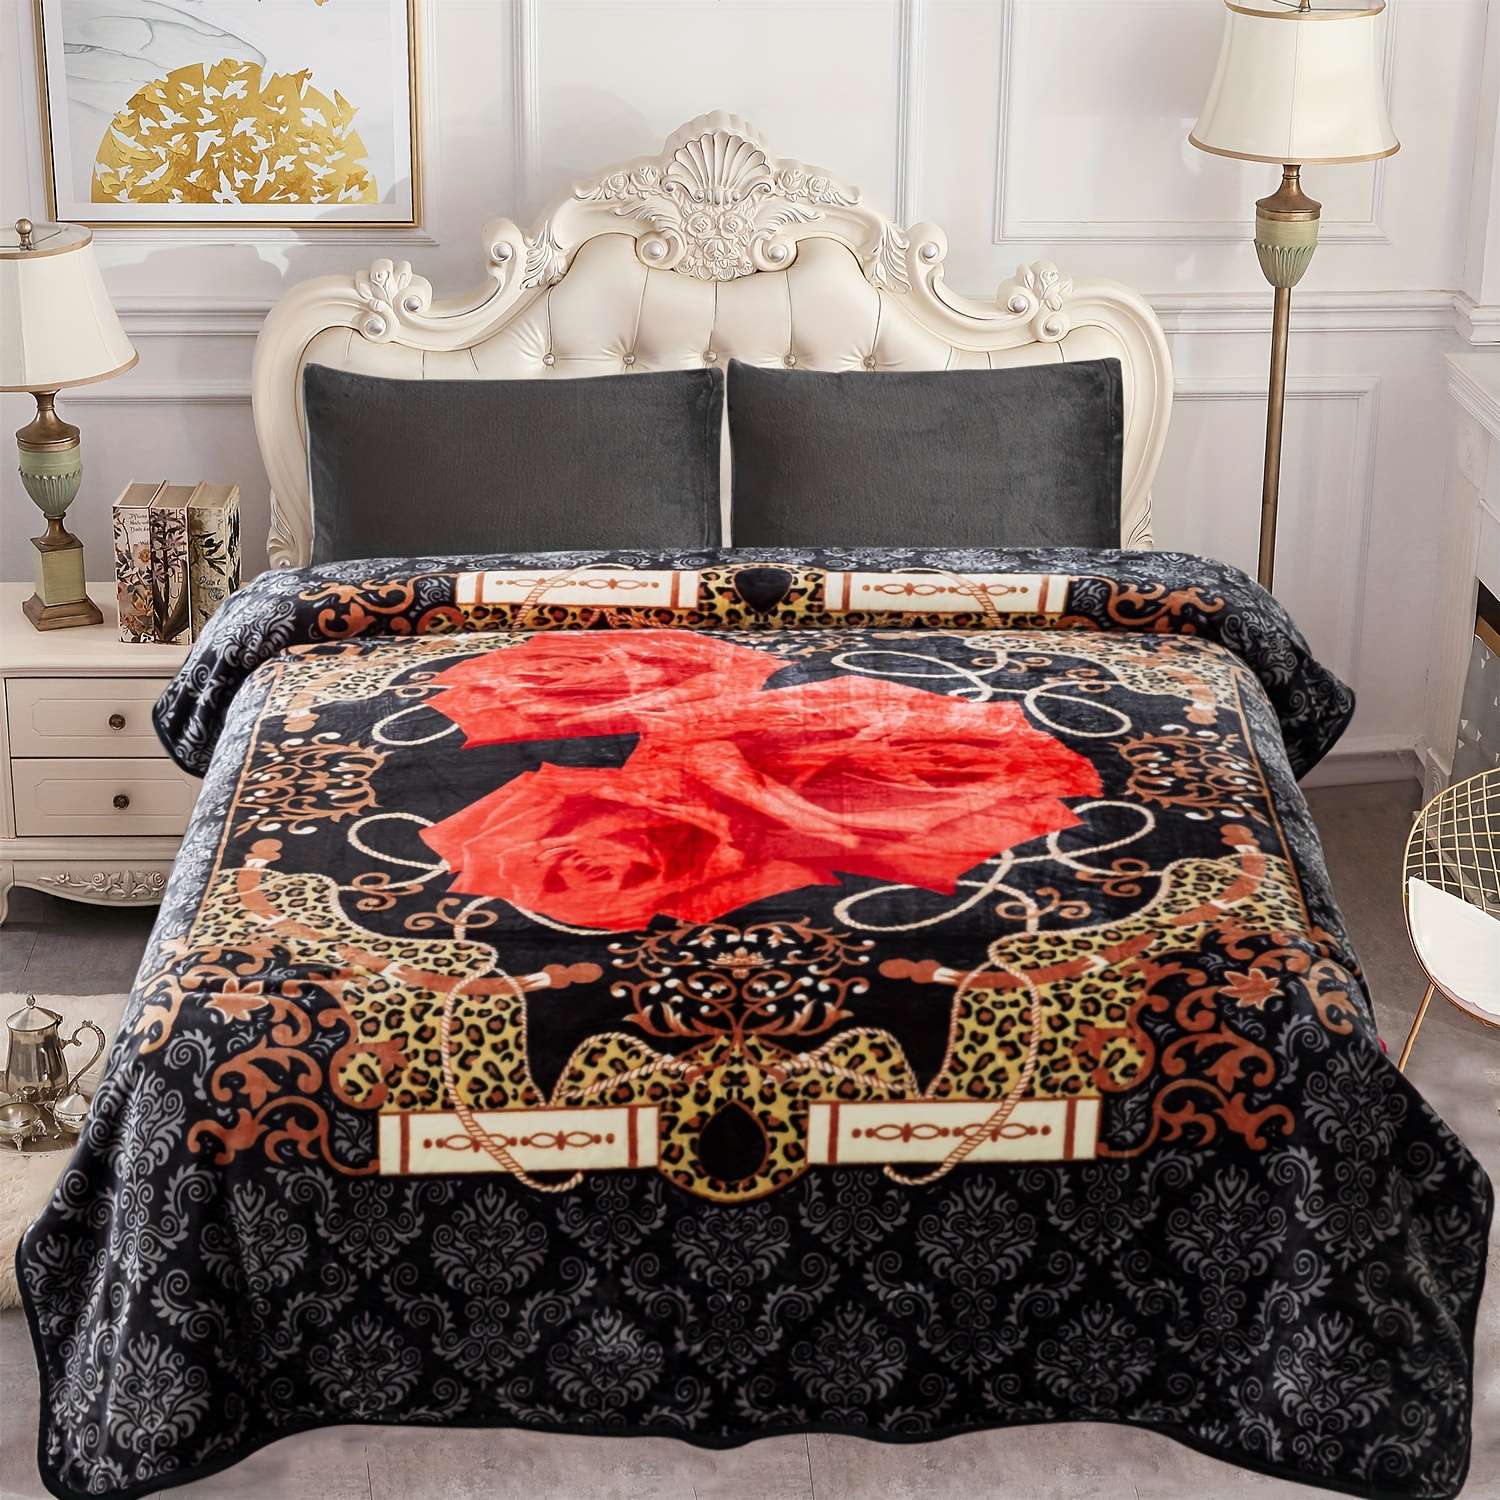 1pc Classic Luxury Floral Print Fleece Blanket, 3.7LBs 1 Ply Plush Bed  Blanket, Soft Mink Throw Blanket Warm Lightweight Sofa Blanket For All  Seasons